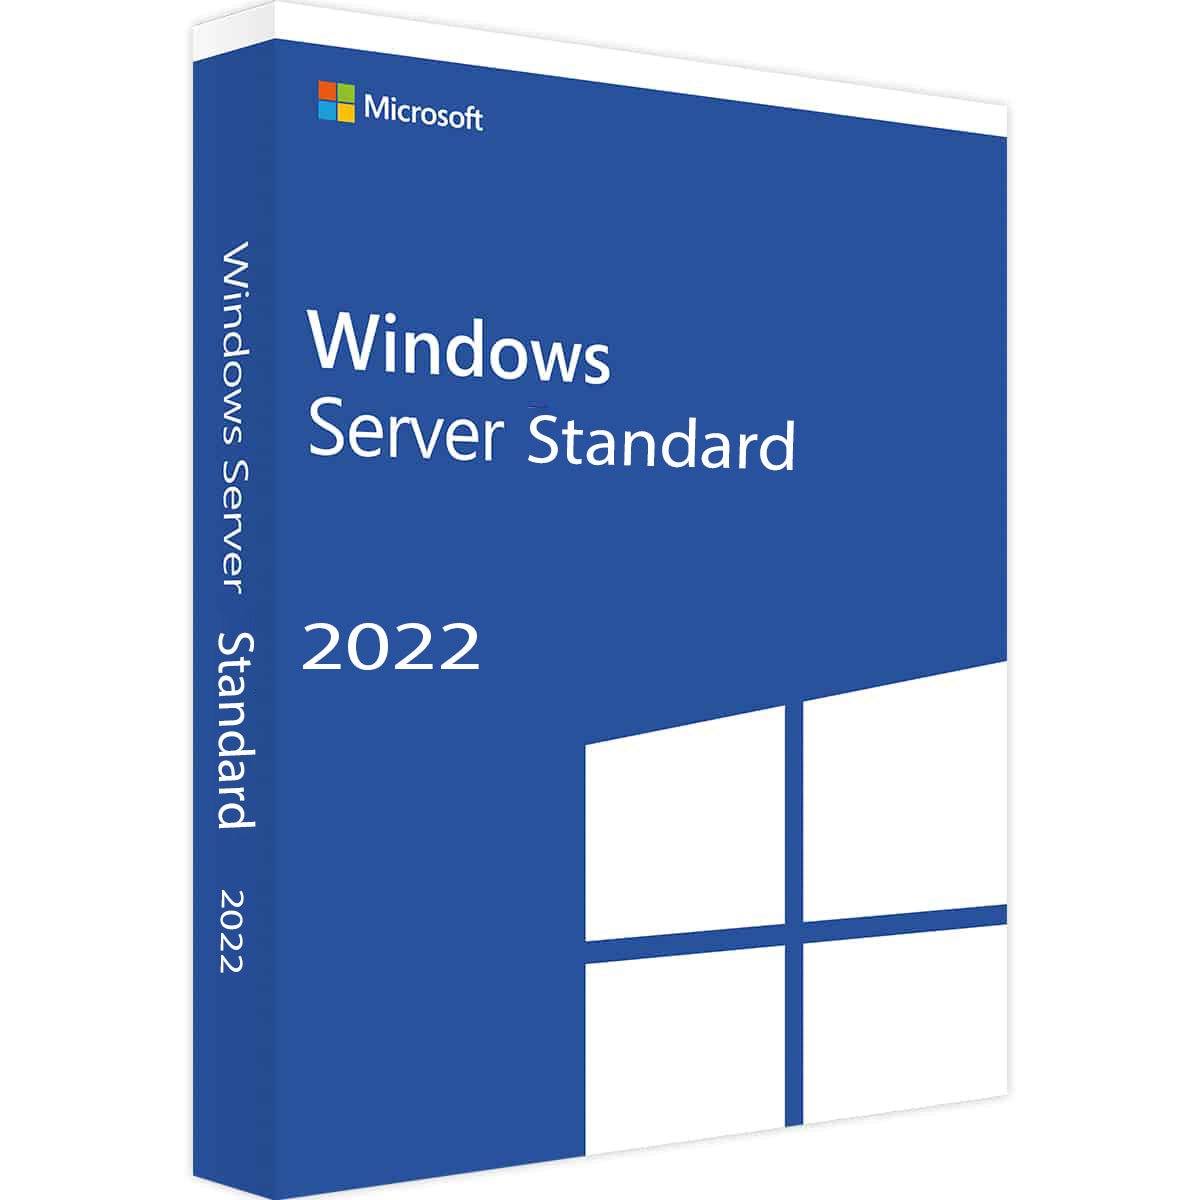 Microsoft Windows Server 2022 Standard 16 kerner - officepakke.dkMicrosoft Windows Server 2022 Standard 16 kernerofficepakke.dkofficepakke.dk